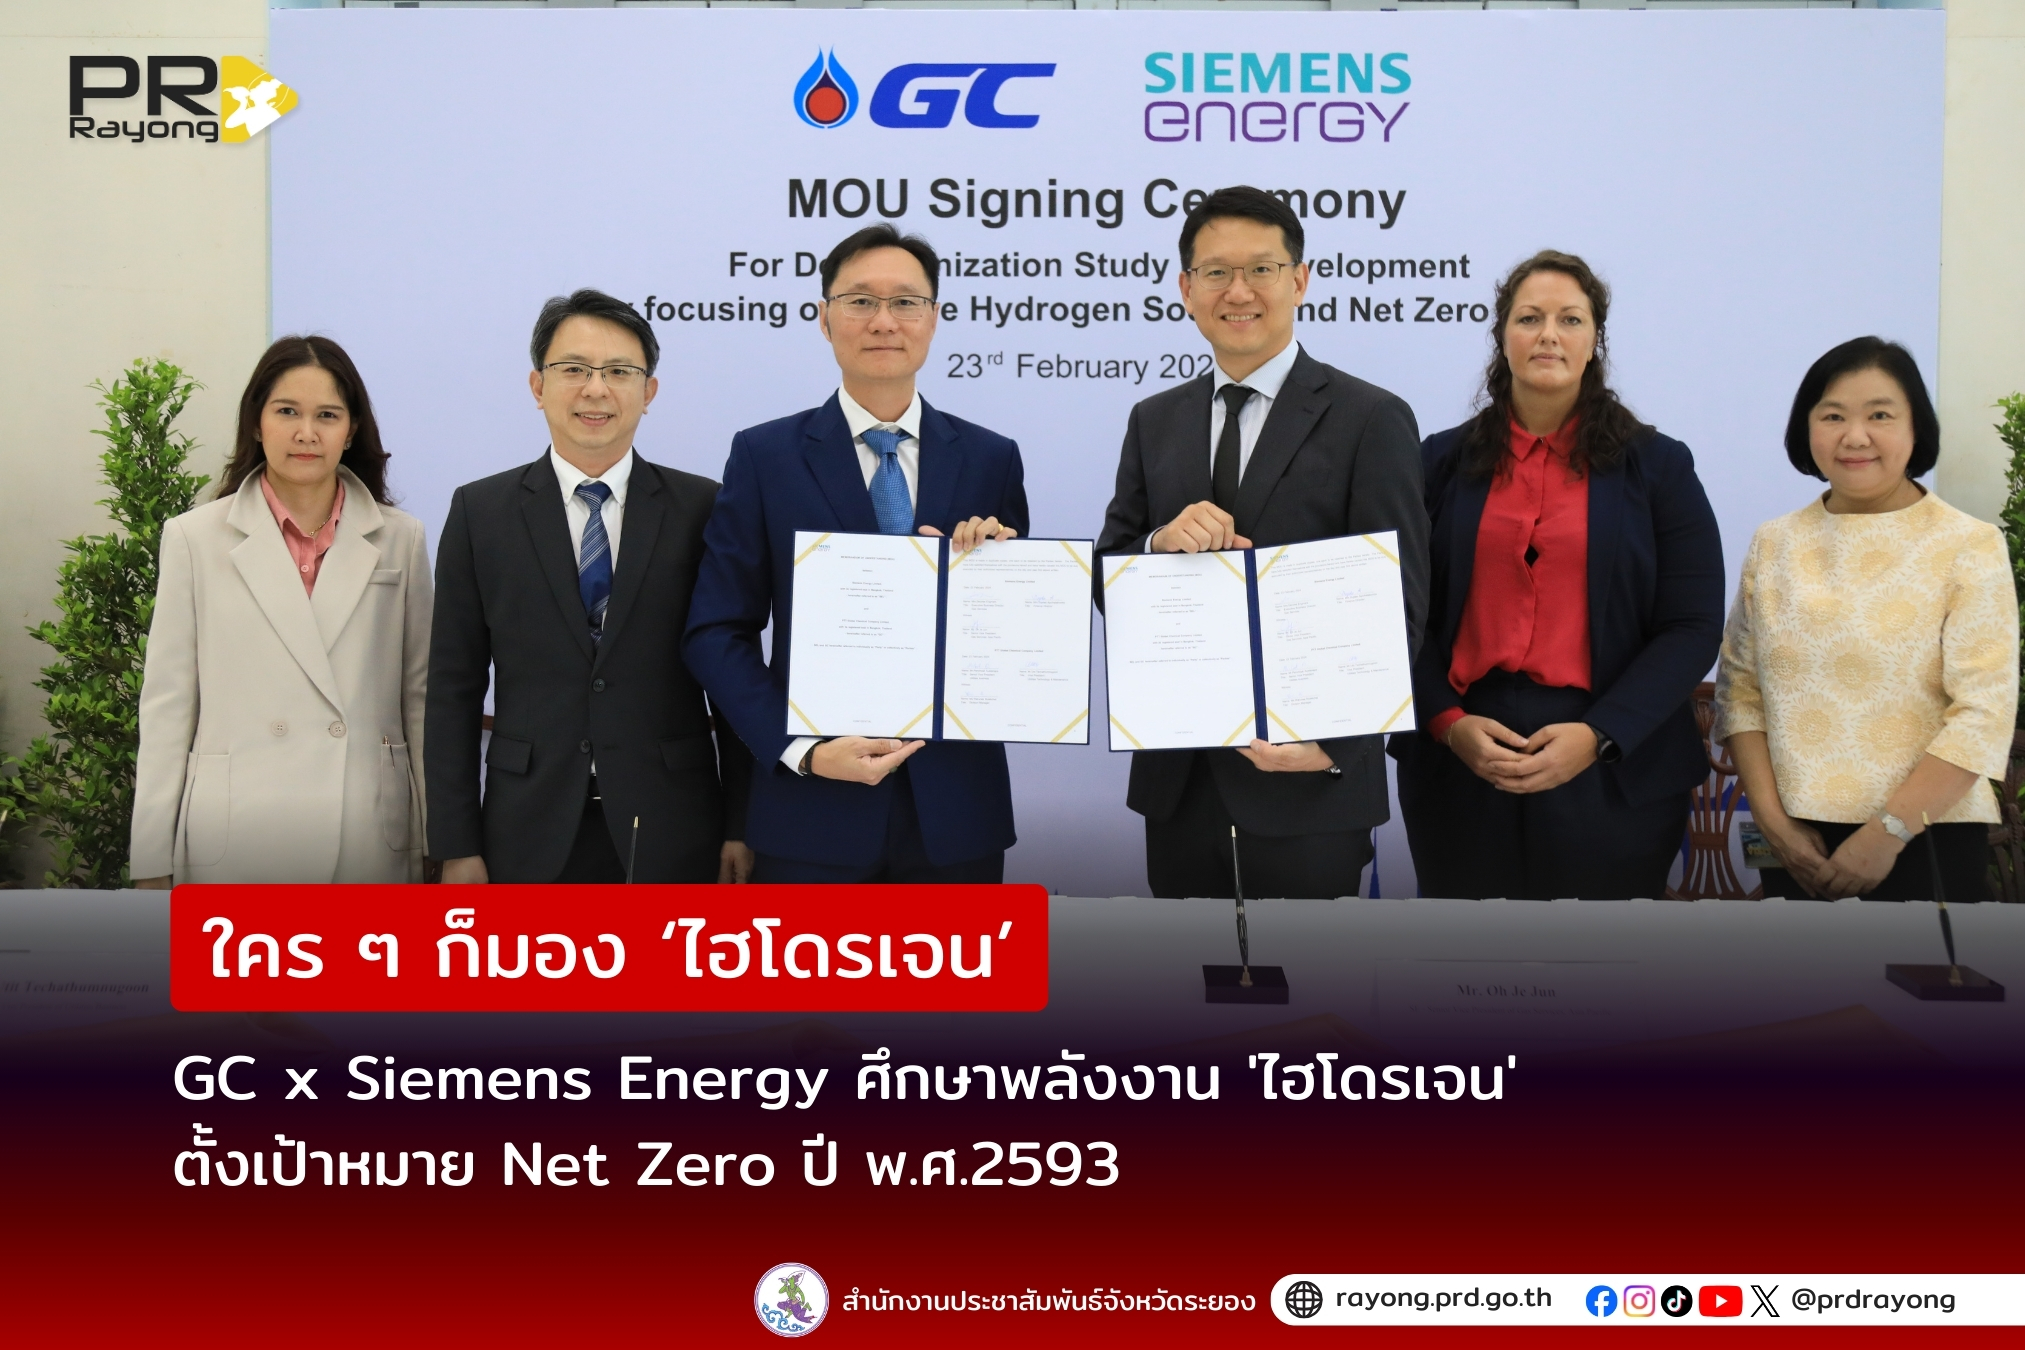 GC x Siemens Energy ศึกษาพลังงาน 'ไฮโดรเจน' ตั้งเป้าหมาย Net Zero ปี พ.ศ.2593